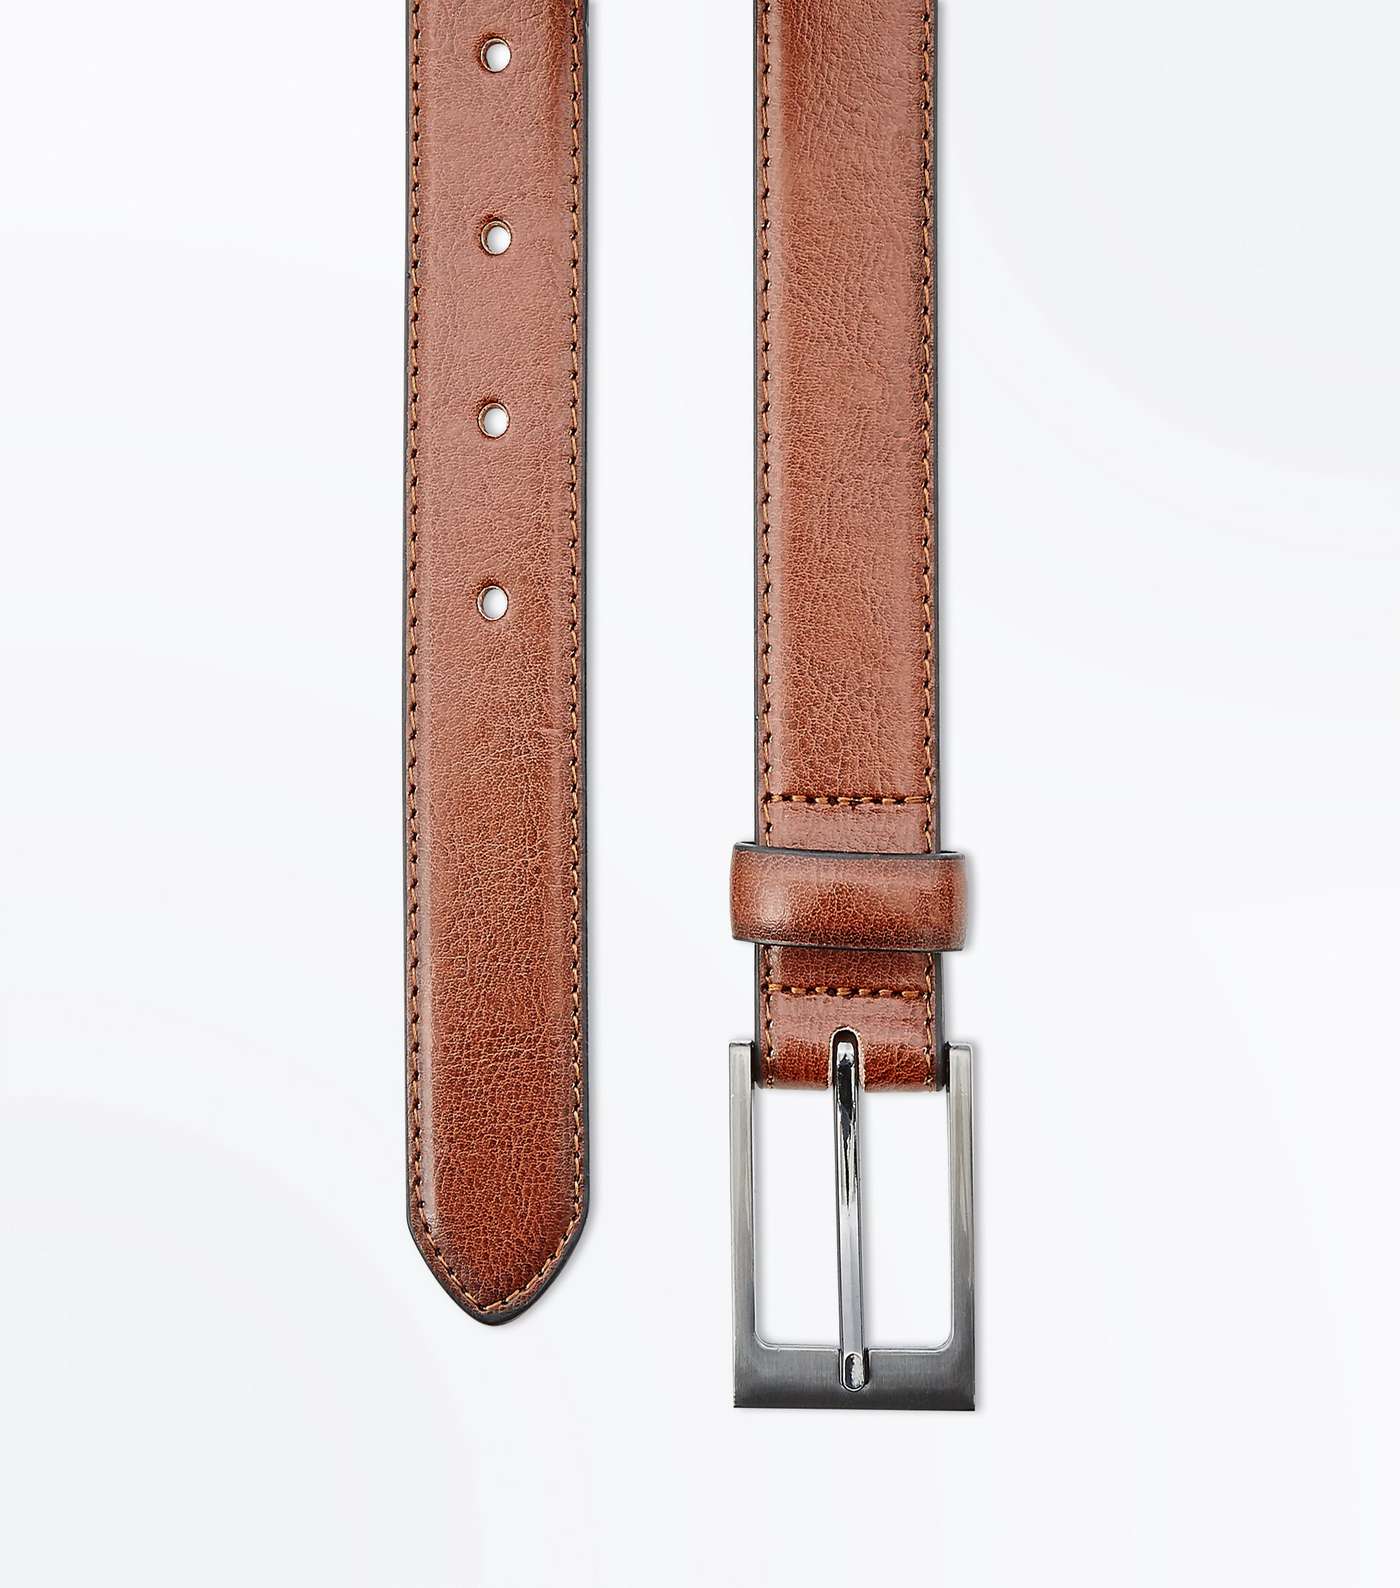 Tan Leather-Look Formal Belt